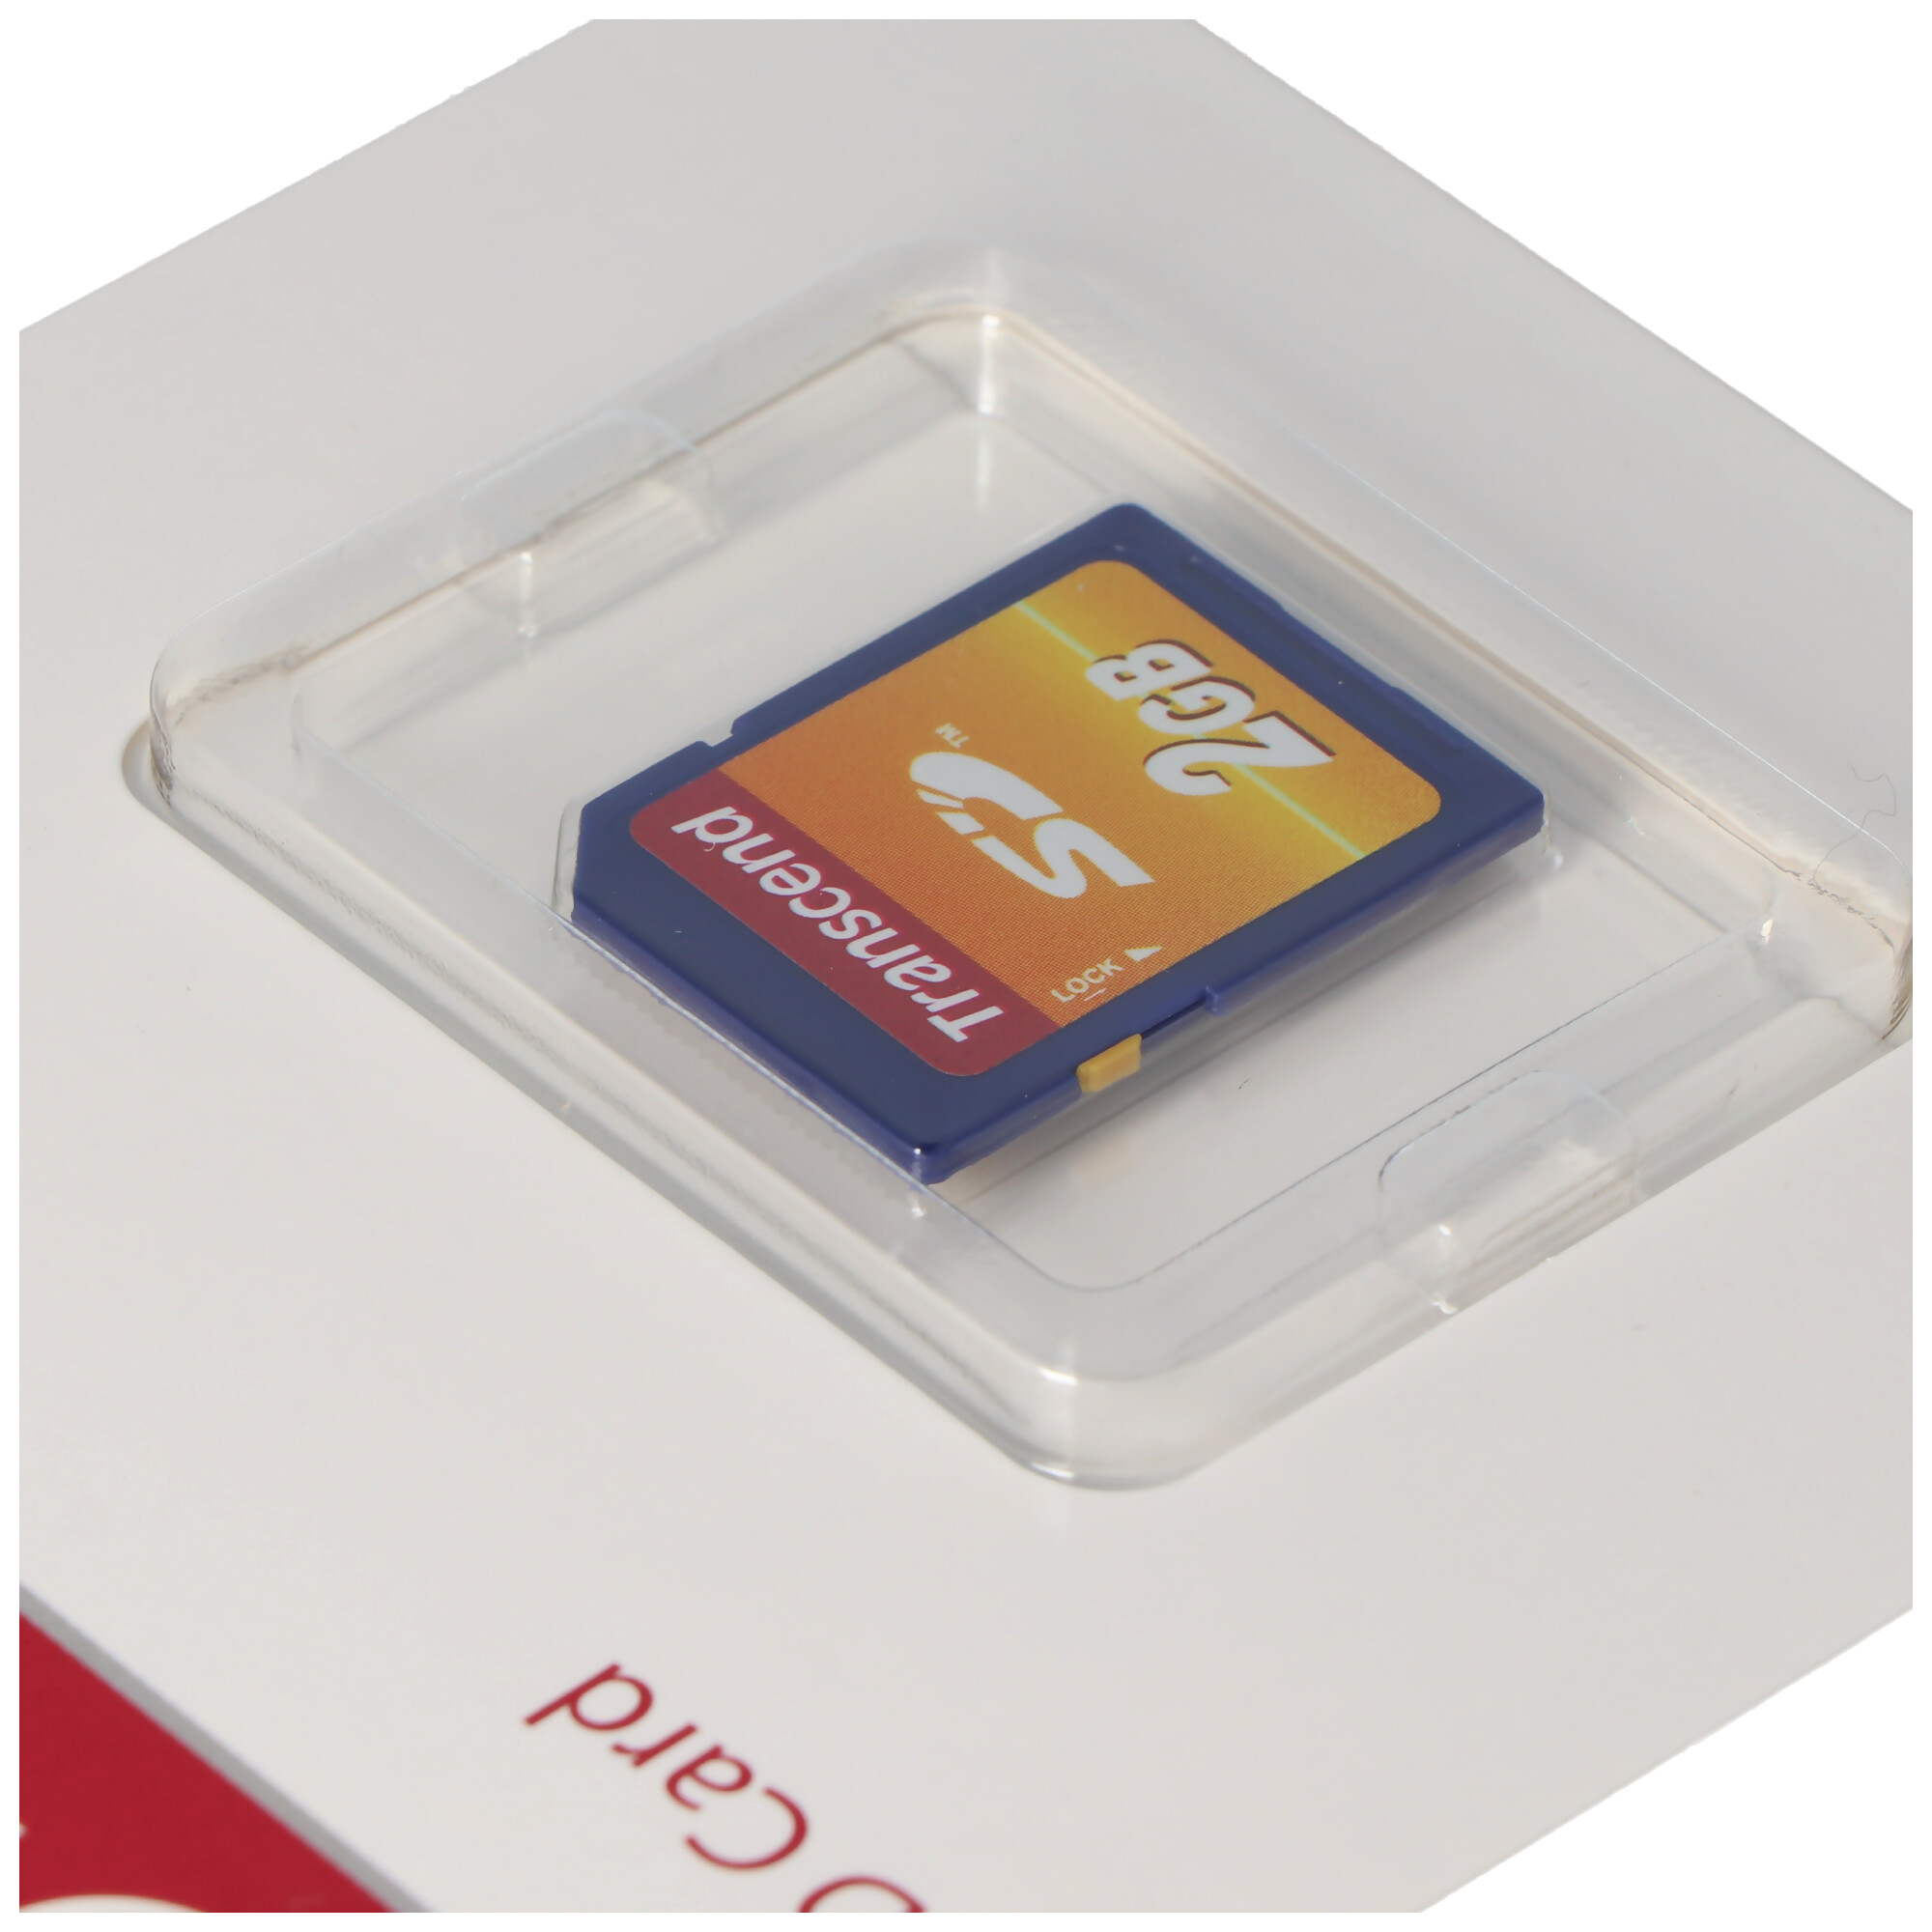 MB/s TRANSCEND 2 GB, 10 MC-T5-Z050, Speicherkarte, SD